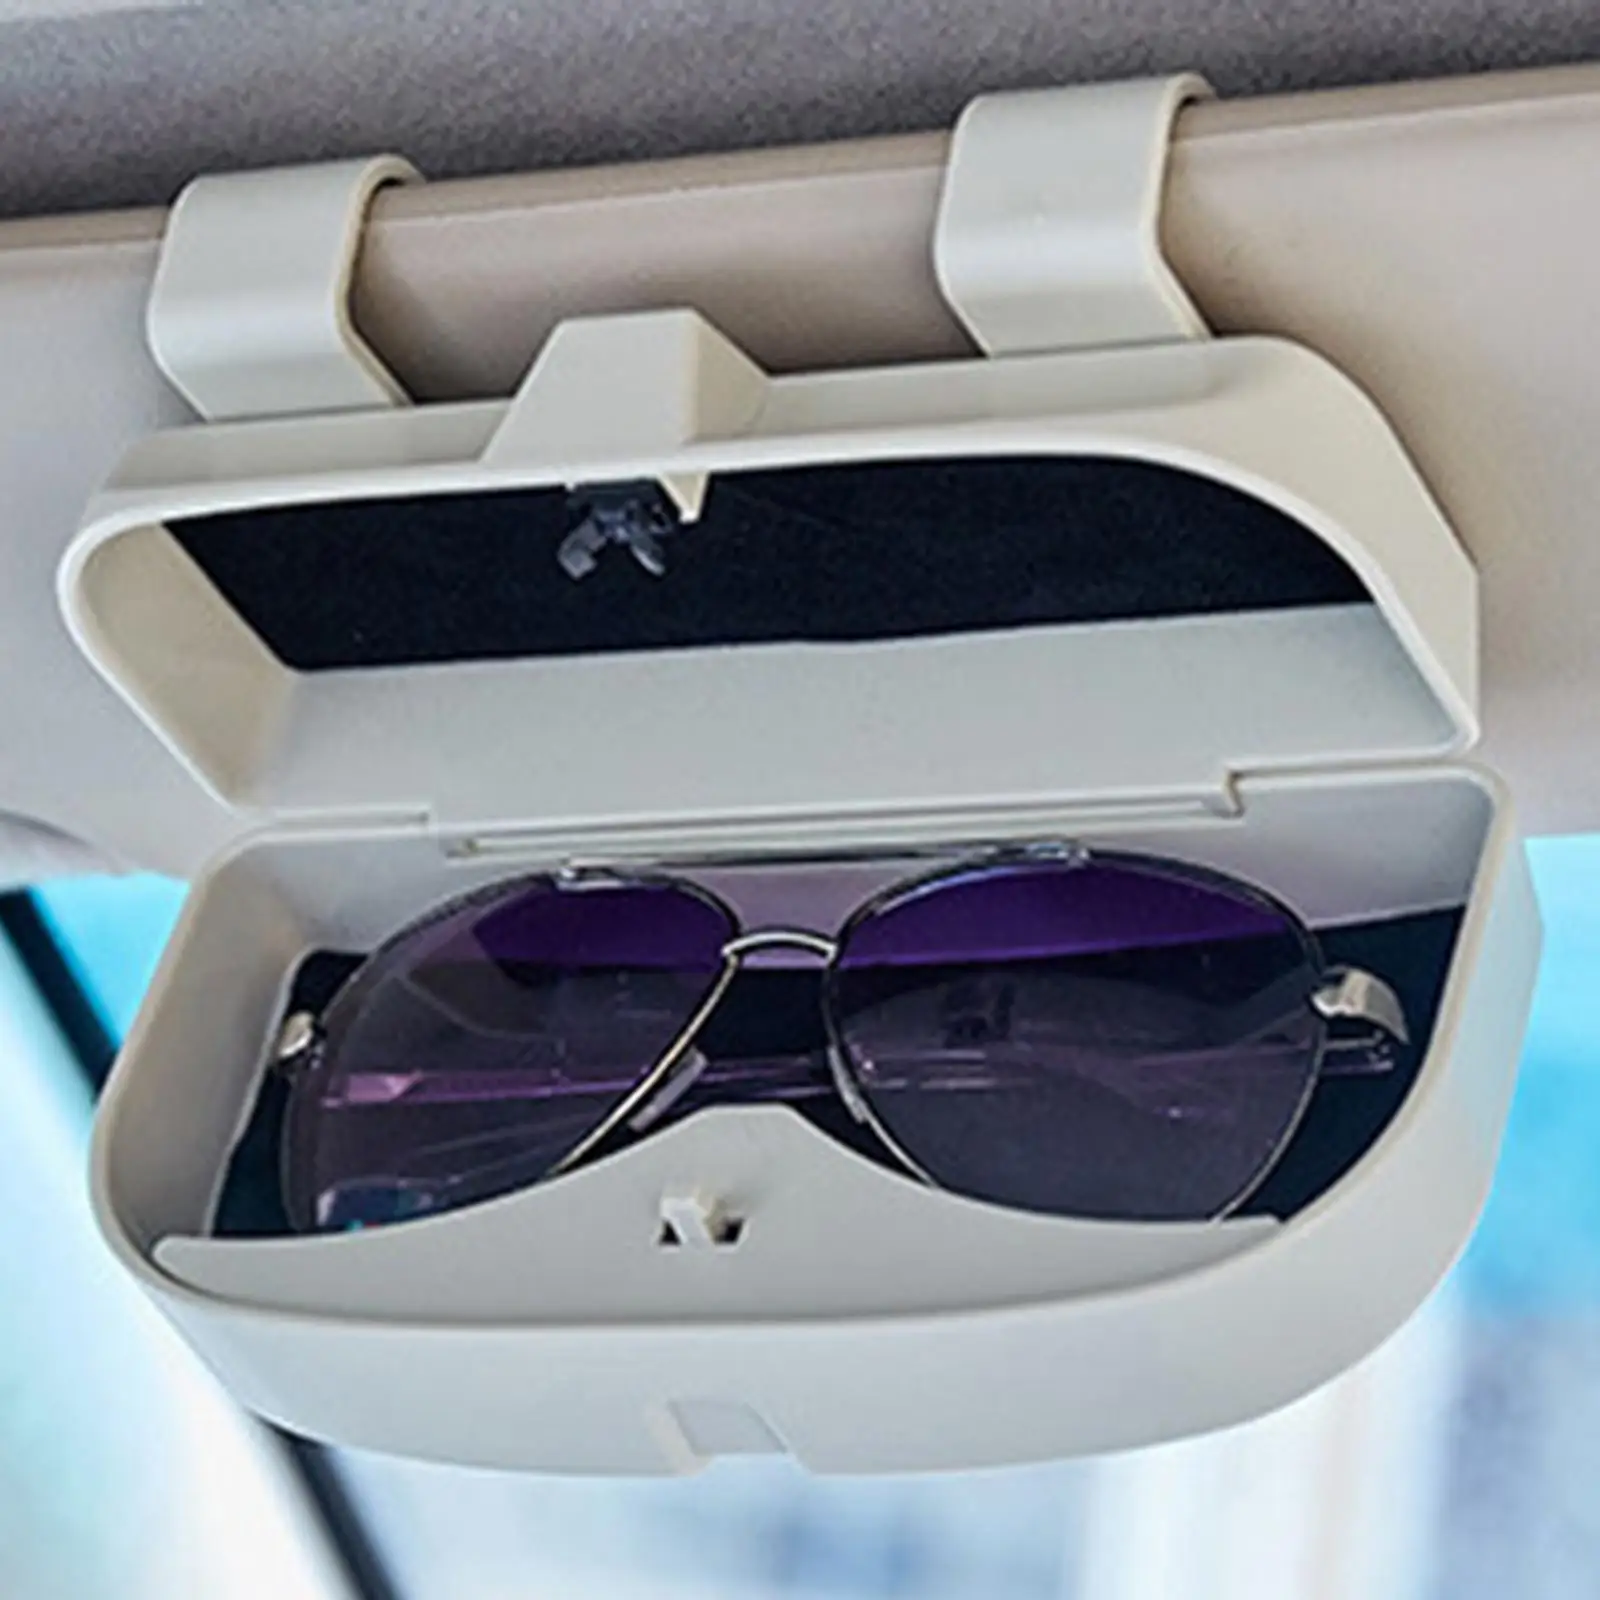 Universal  Visor Glasses Case  Holder Organizer, Durable  Vehicle Models Storage Box for Travel Accessories Suvs